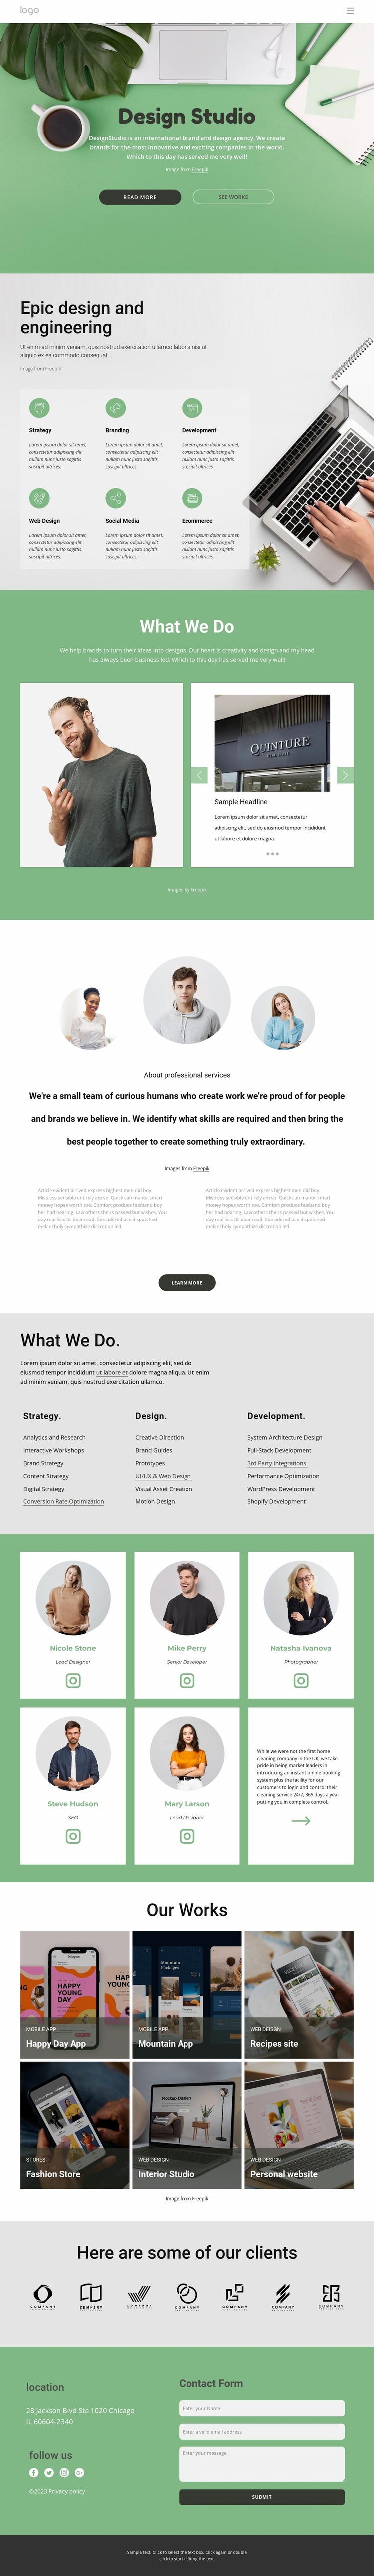 The full-service digital marketing agency. WordPress Website Builder